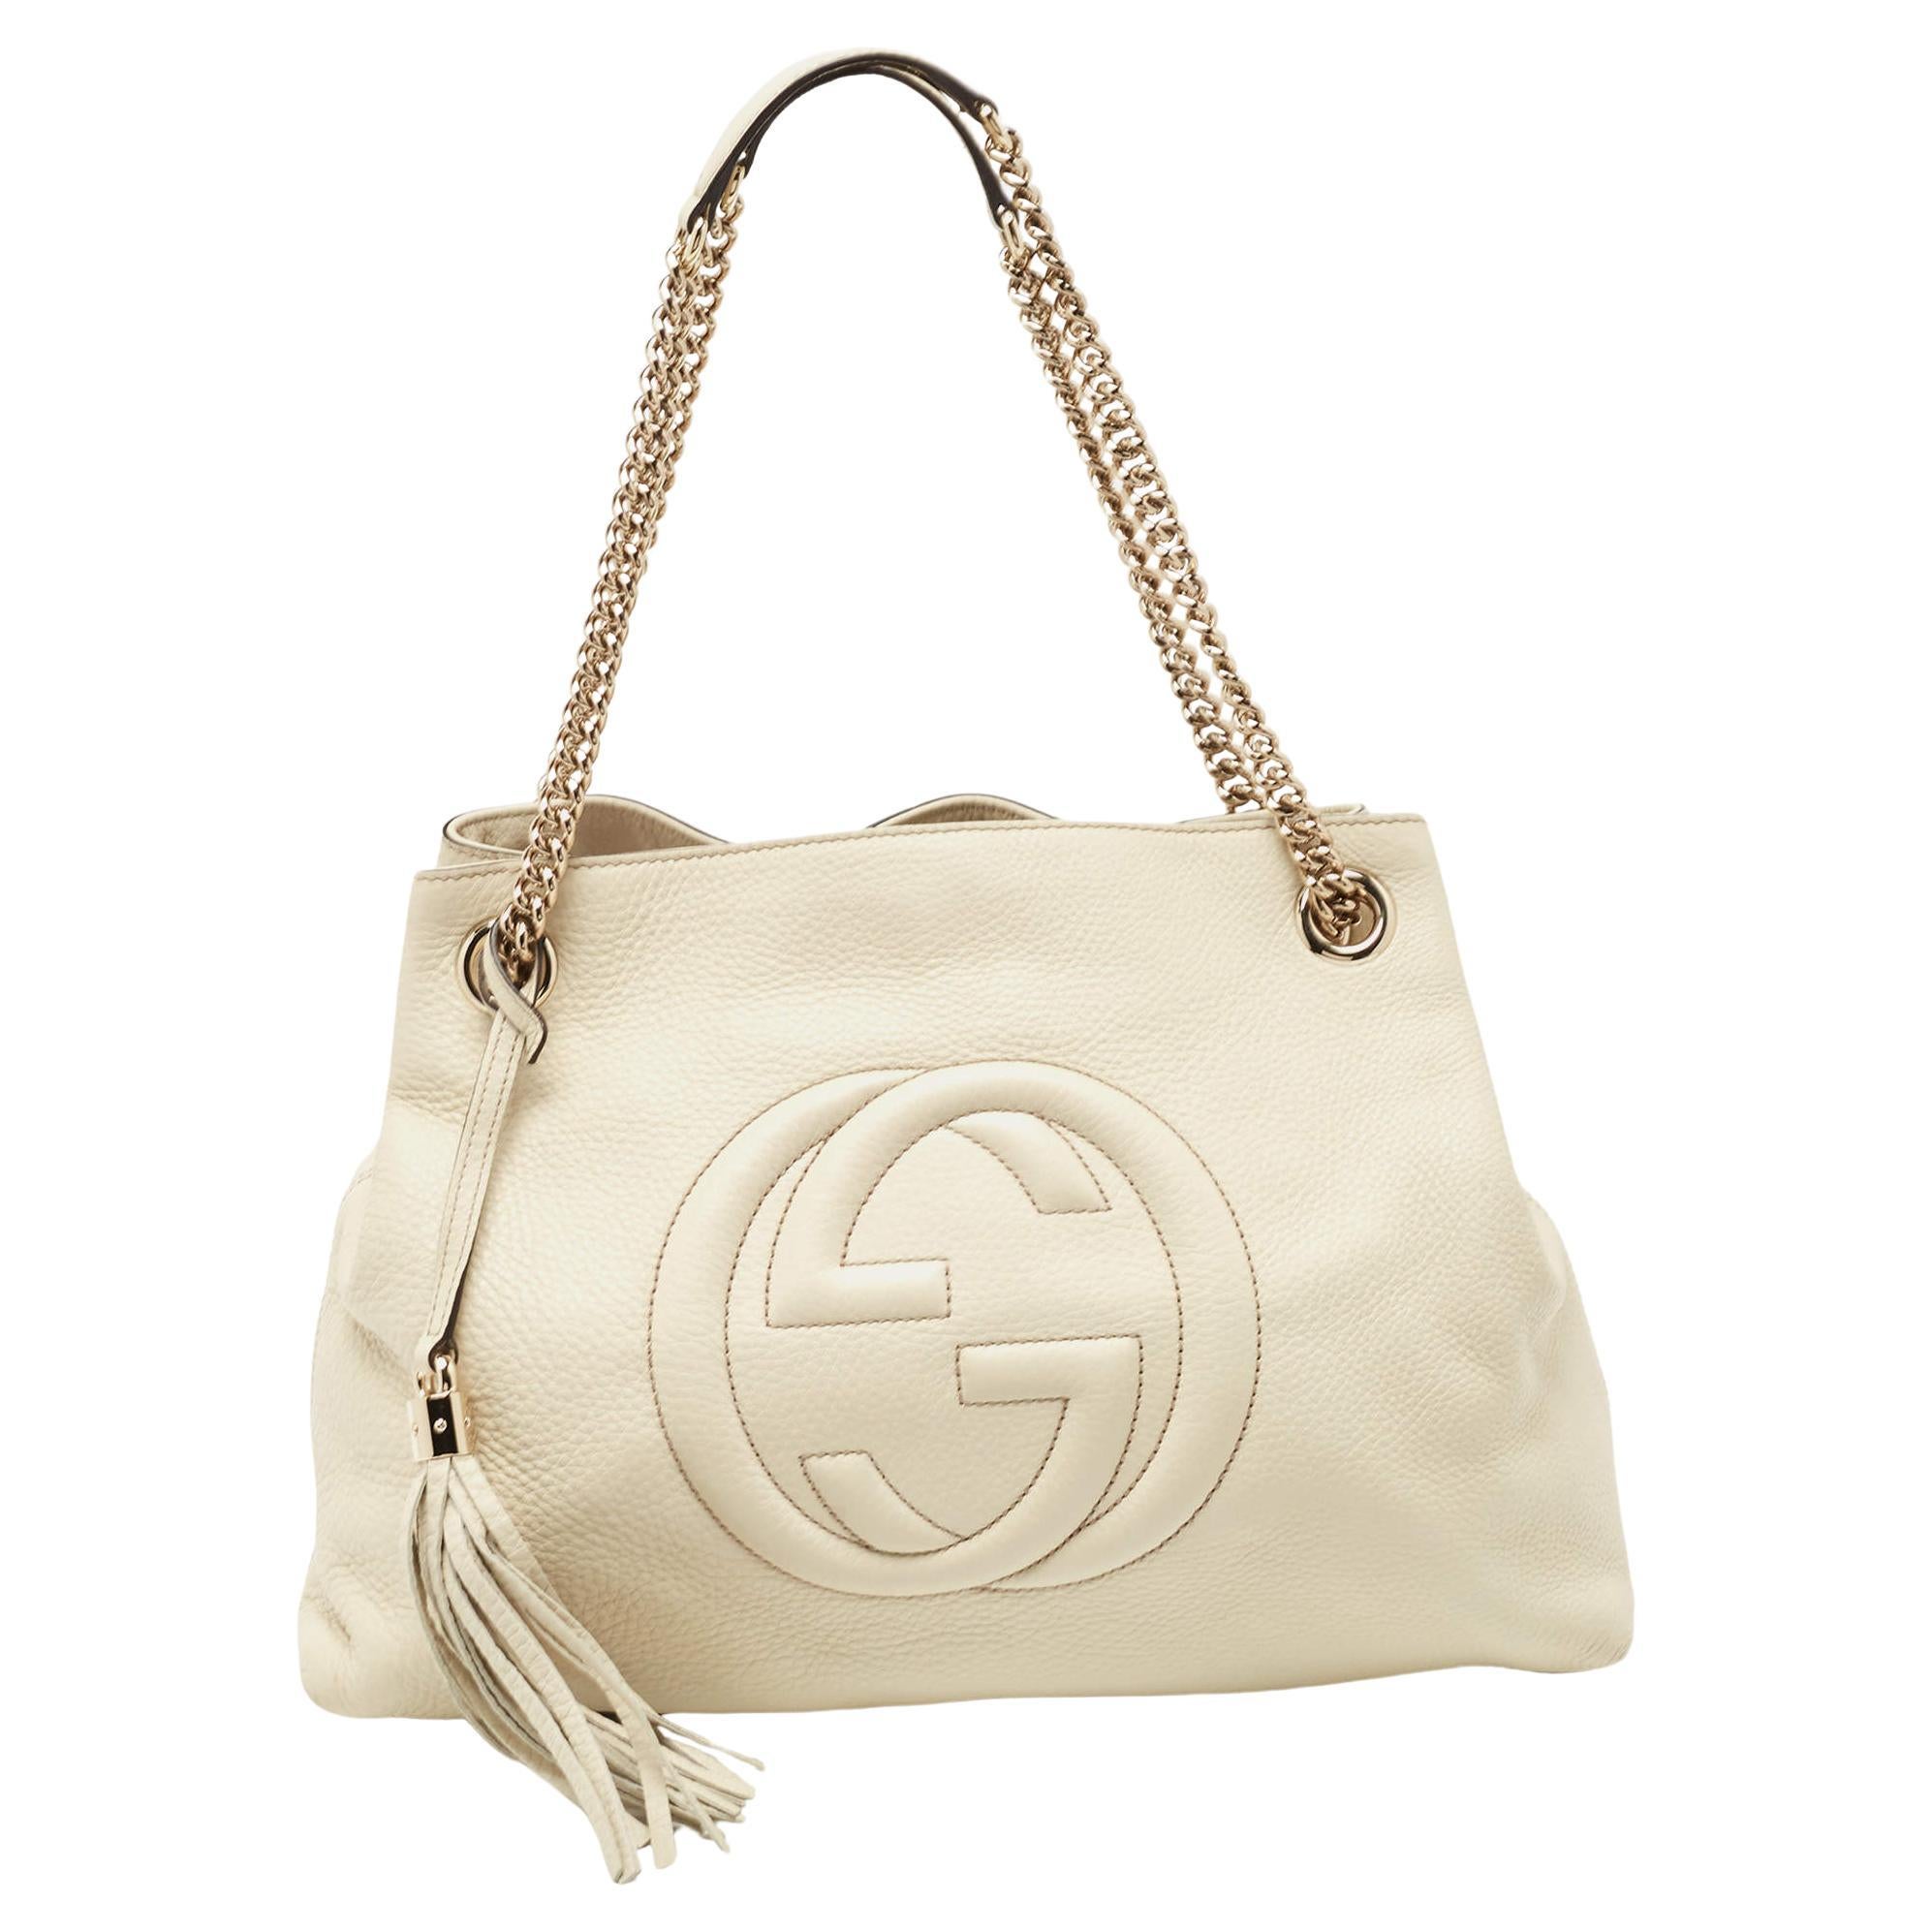 Gucci White Leather Medium Chain Soho Shoulder Bag